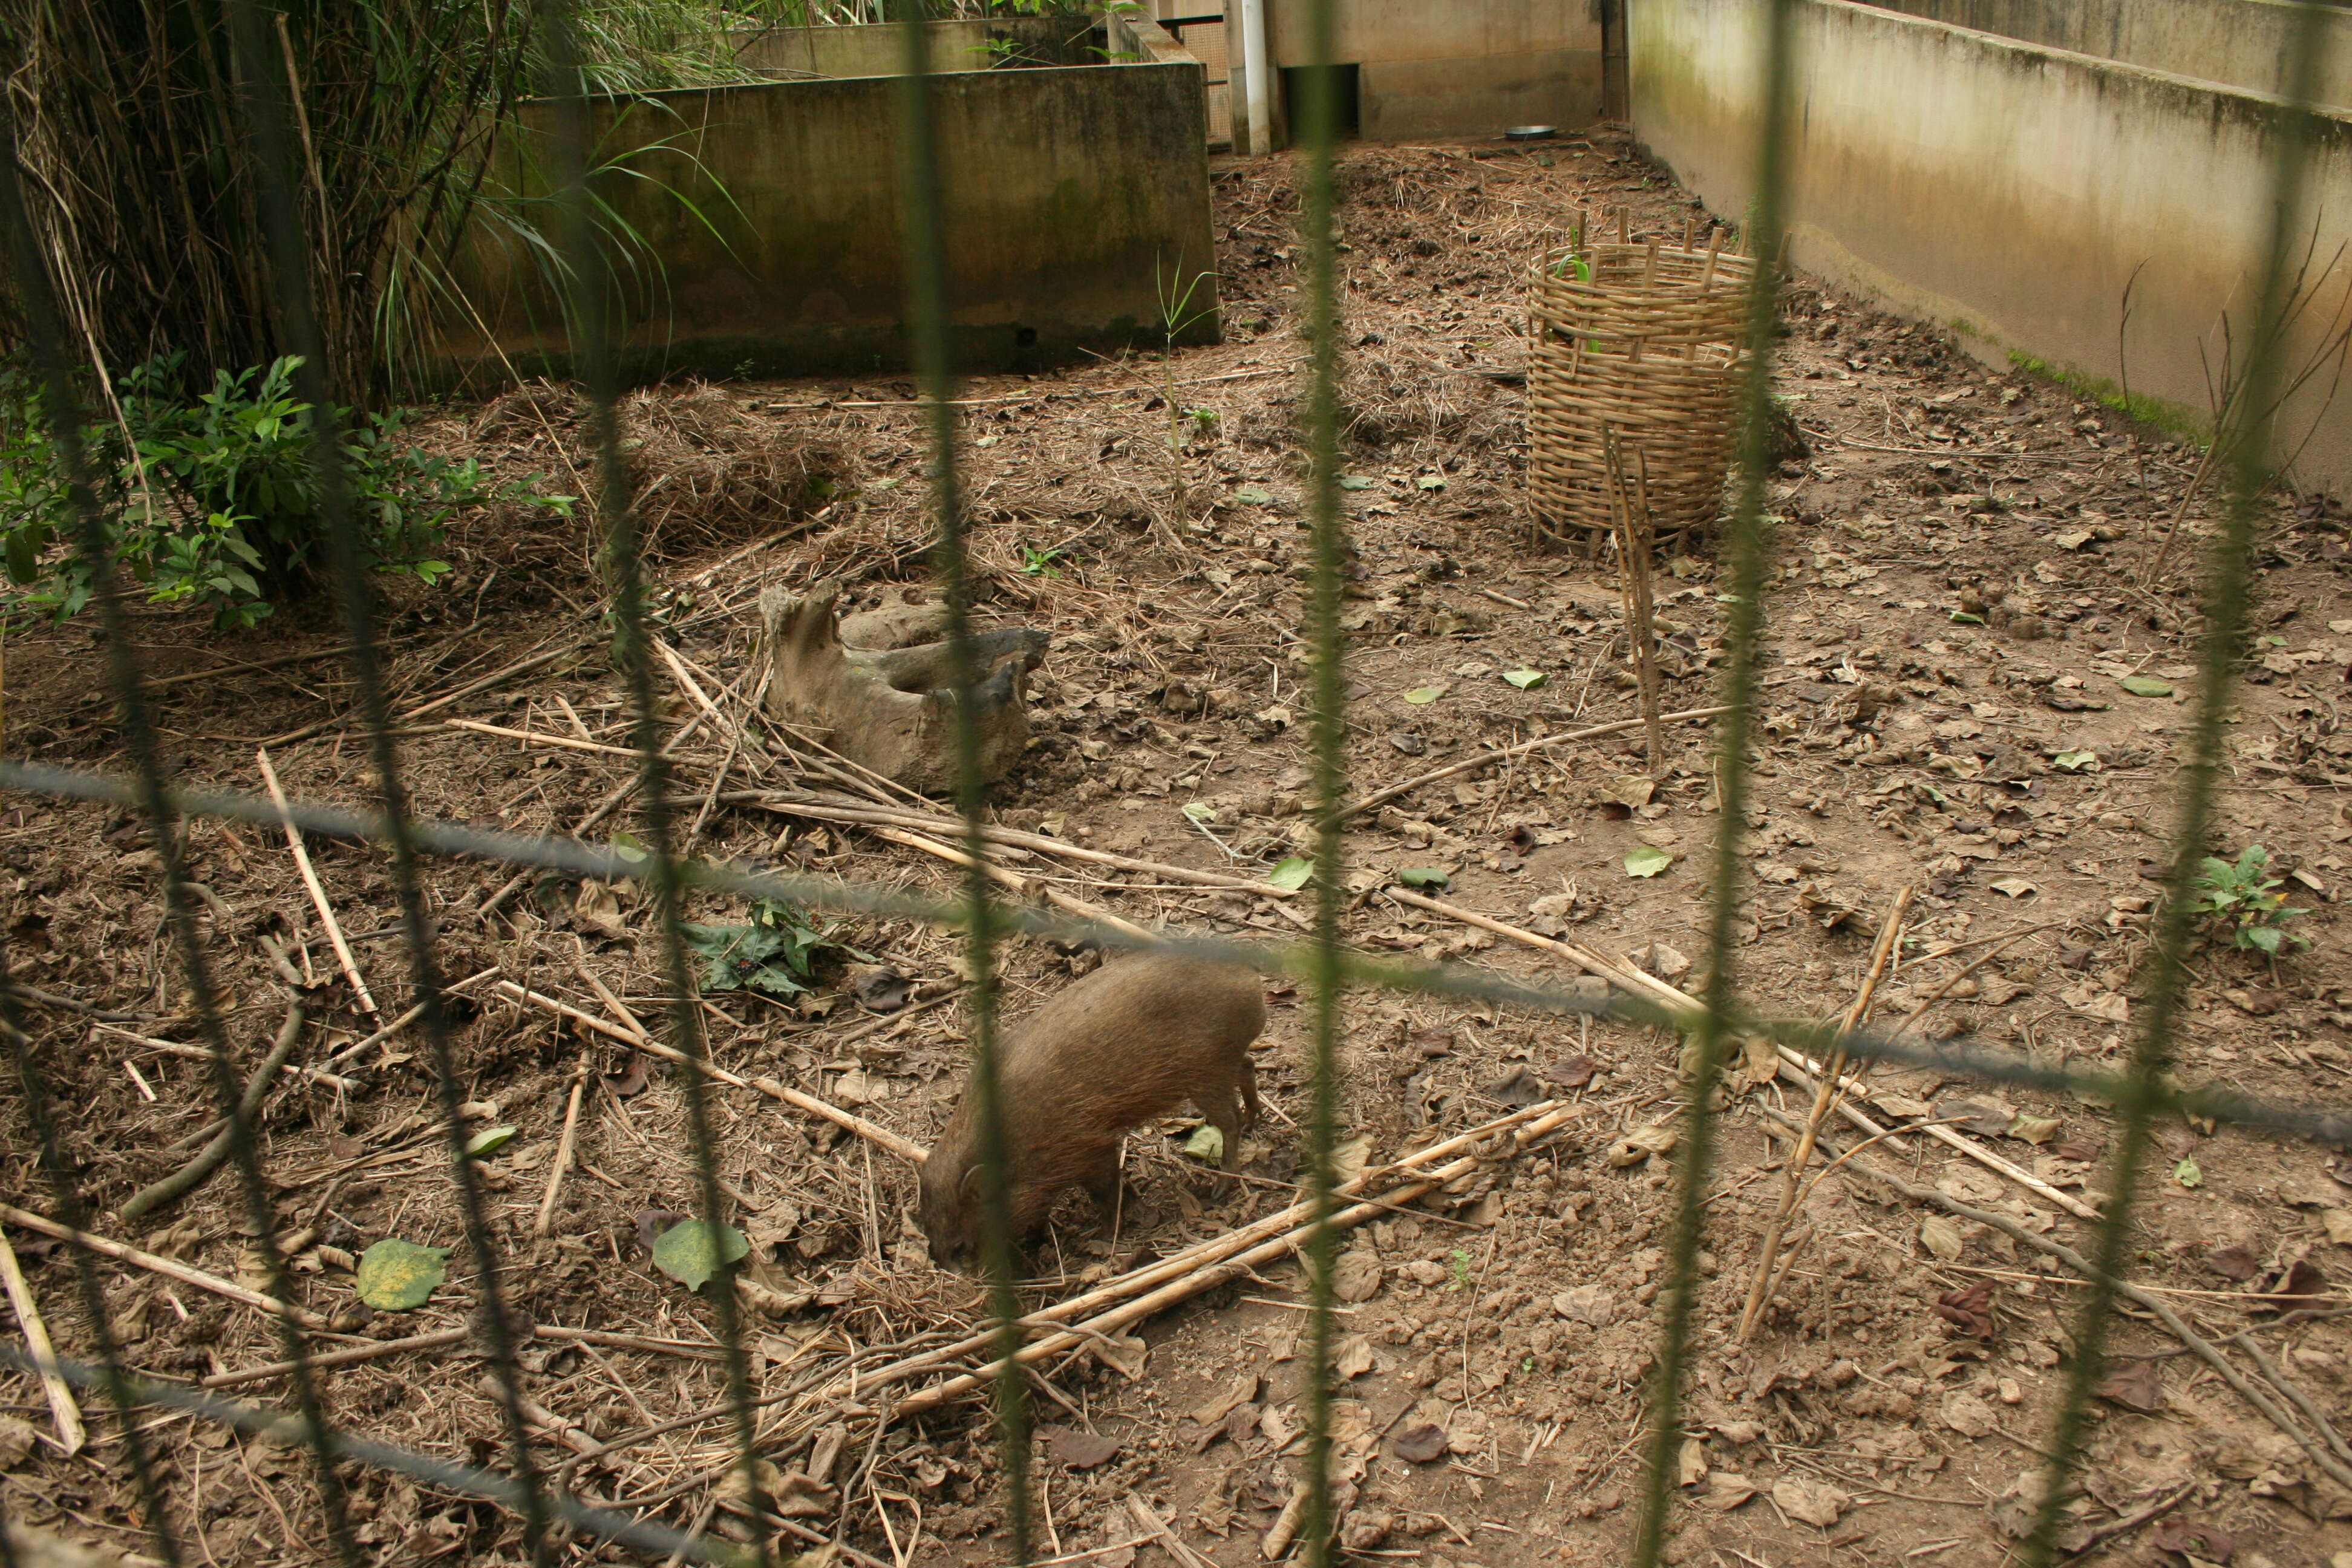 Image of pygmy hog